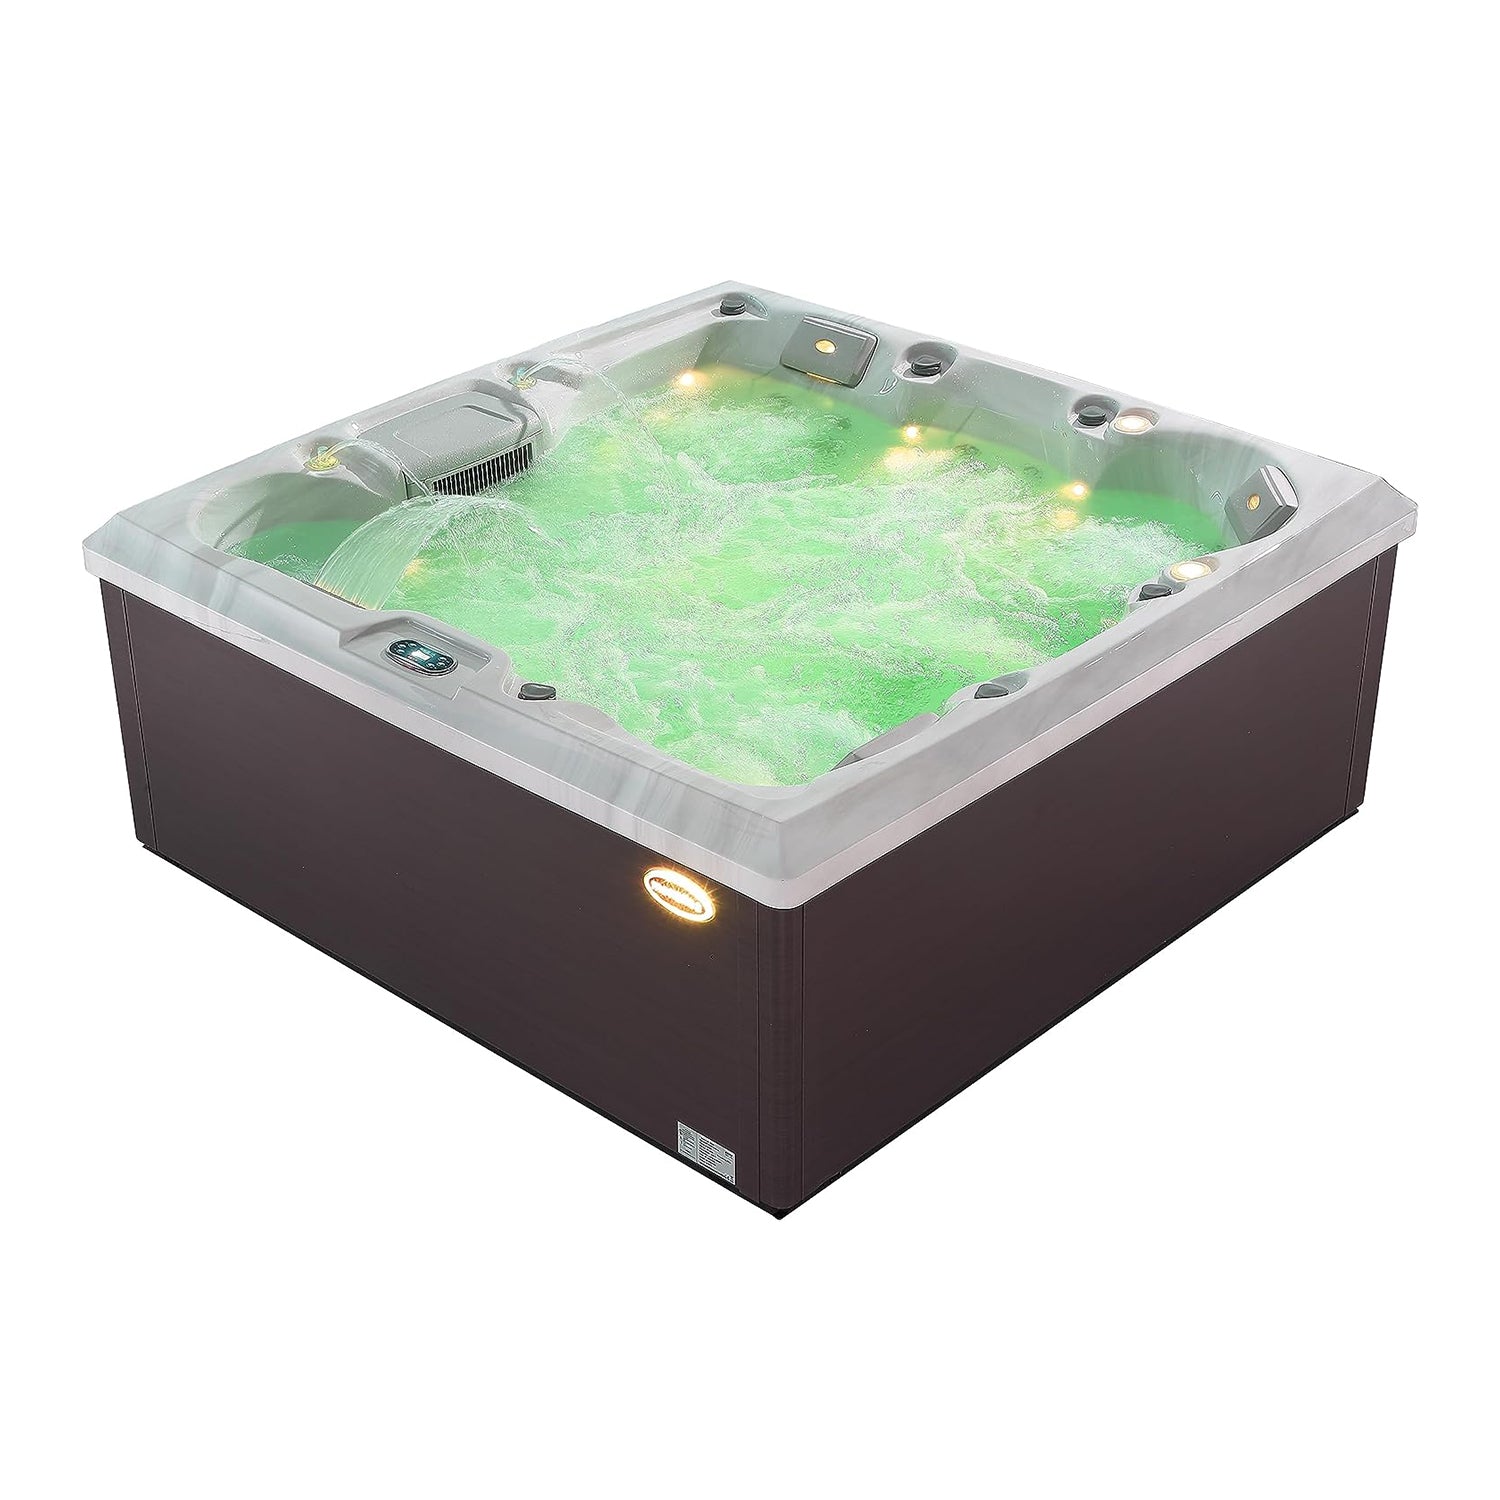 Freestanding Luxury 6-Person Square Outdoor Hot Tub - ElitePlayPro